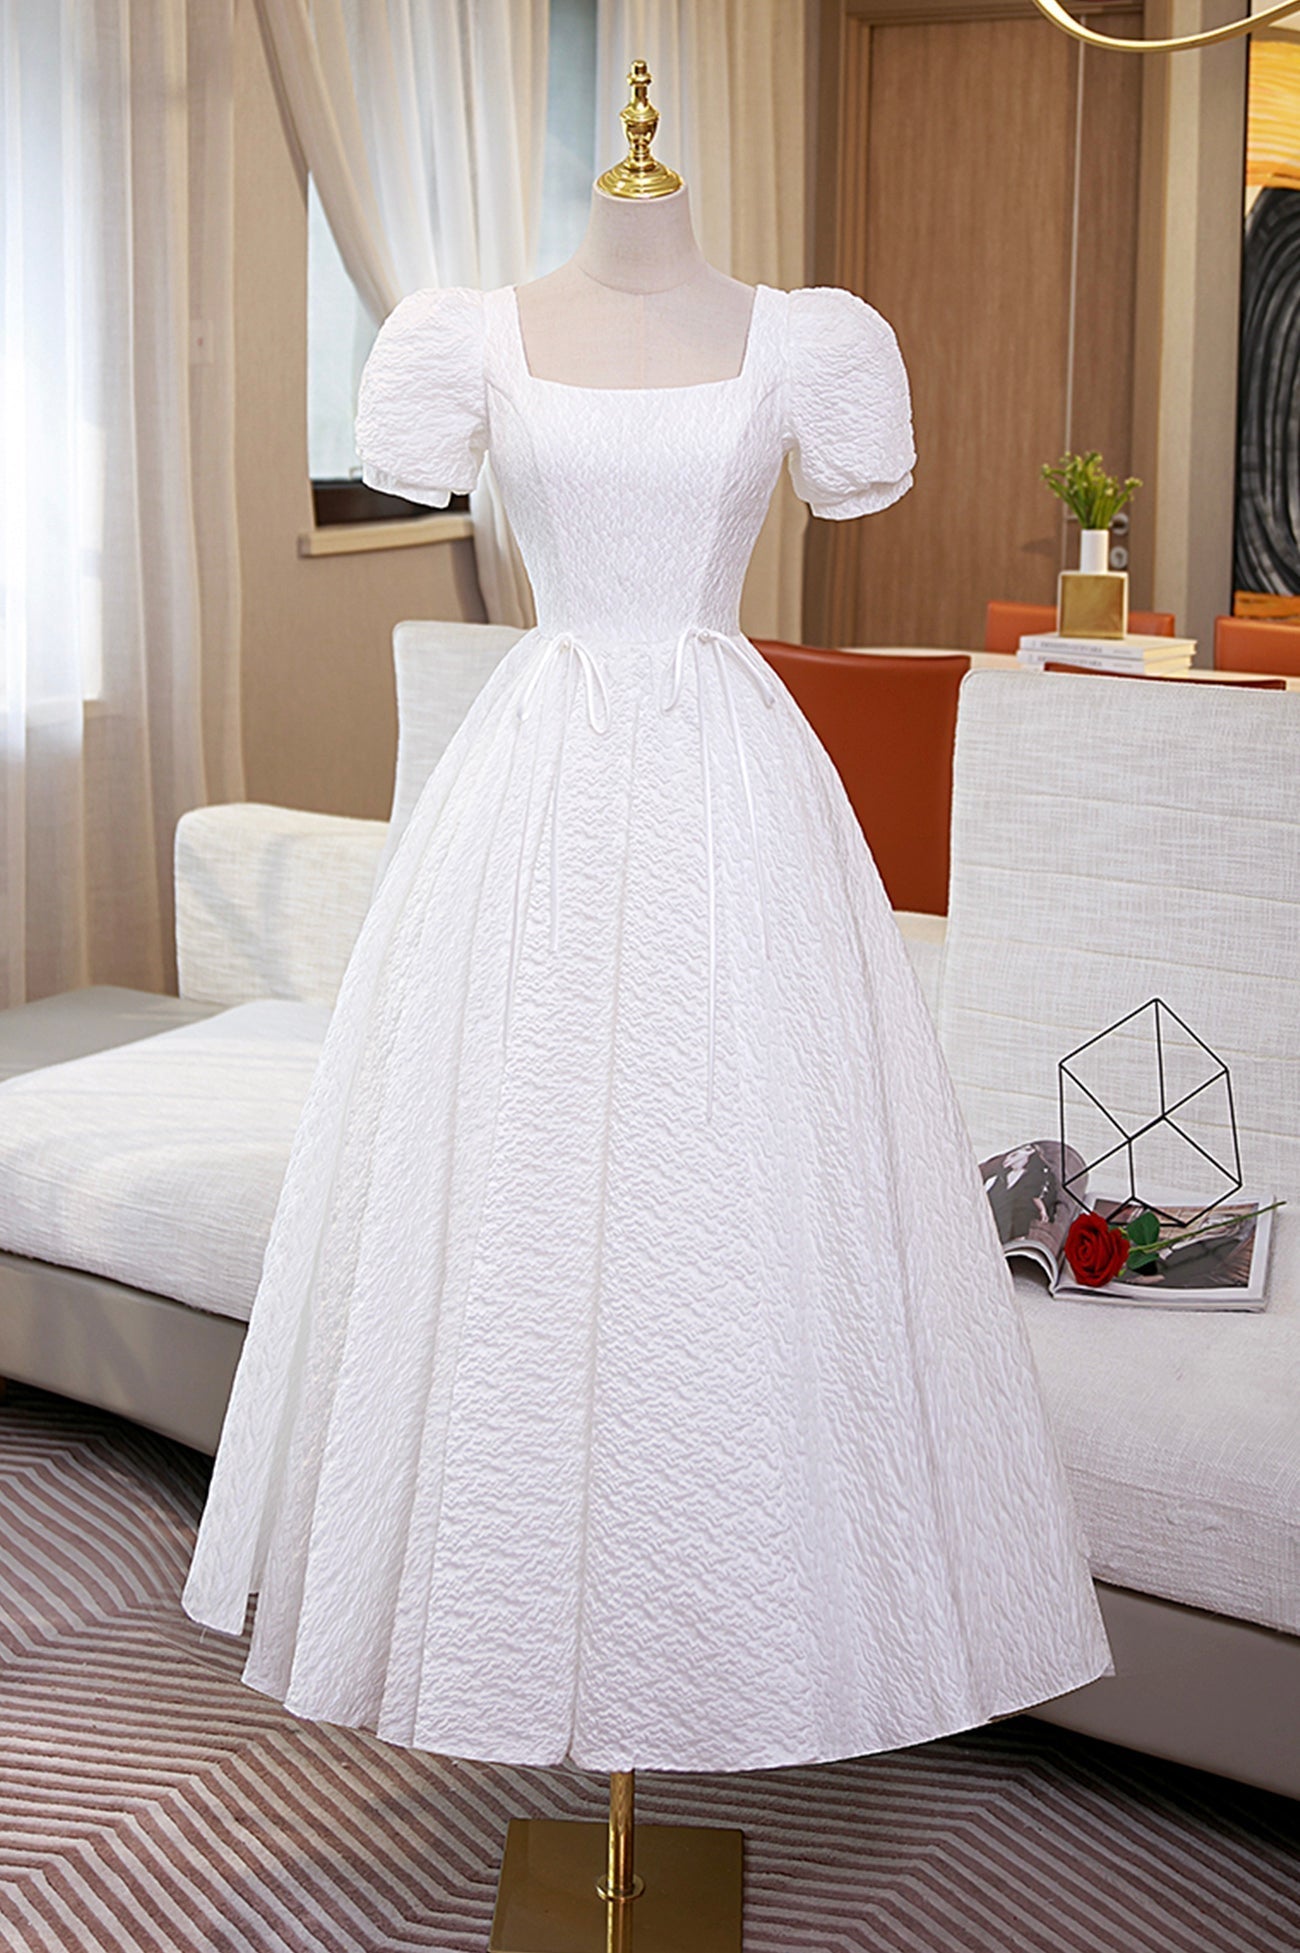 White A-Line Corset Homecoming Dress, Cute Short Sleeve Evening Dress outfit, Homecoming Dresses Pockets